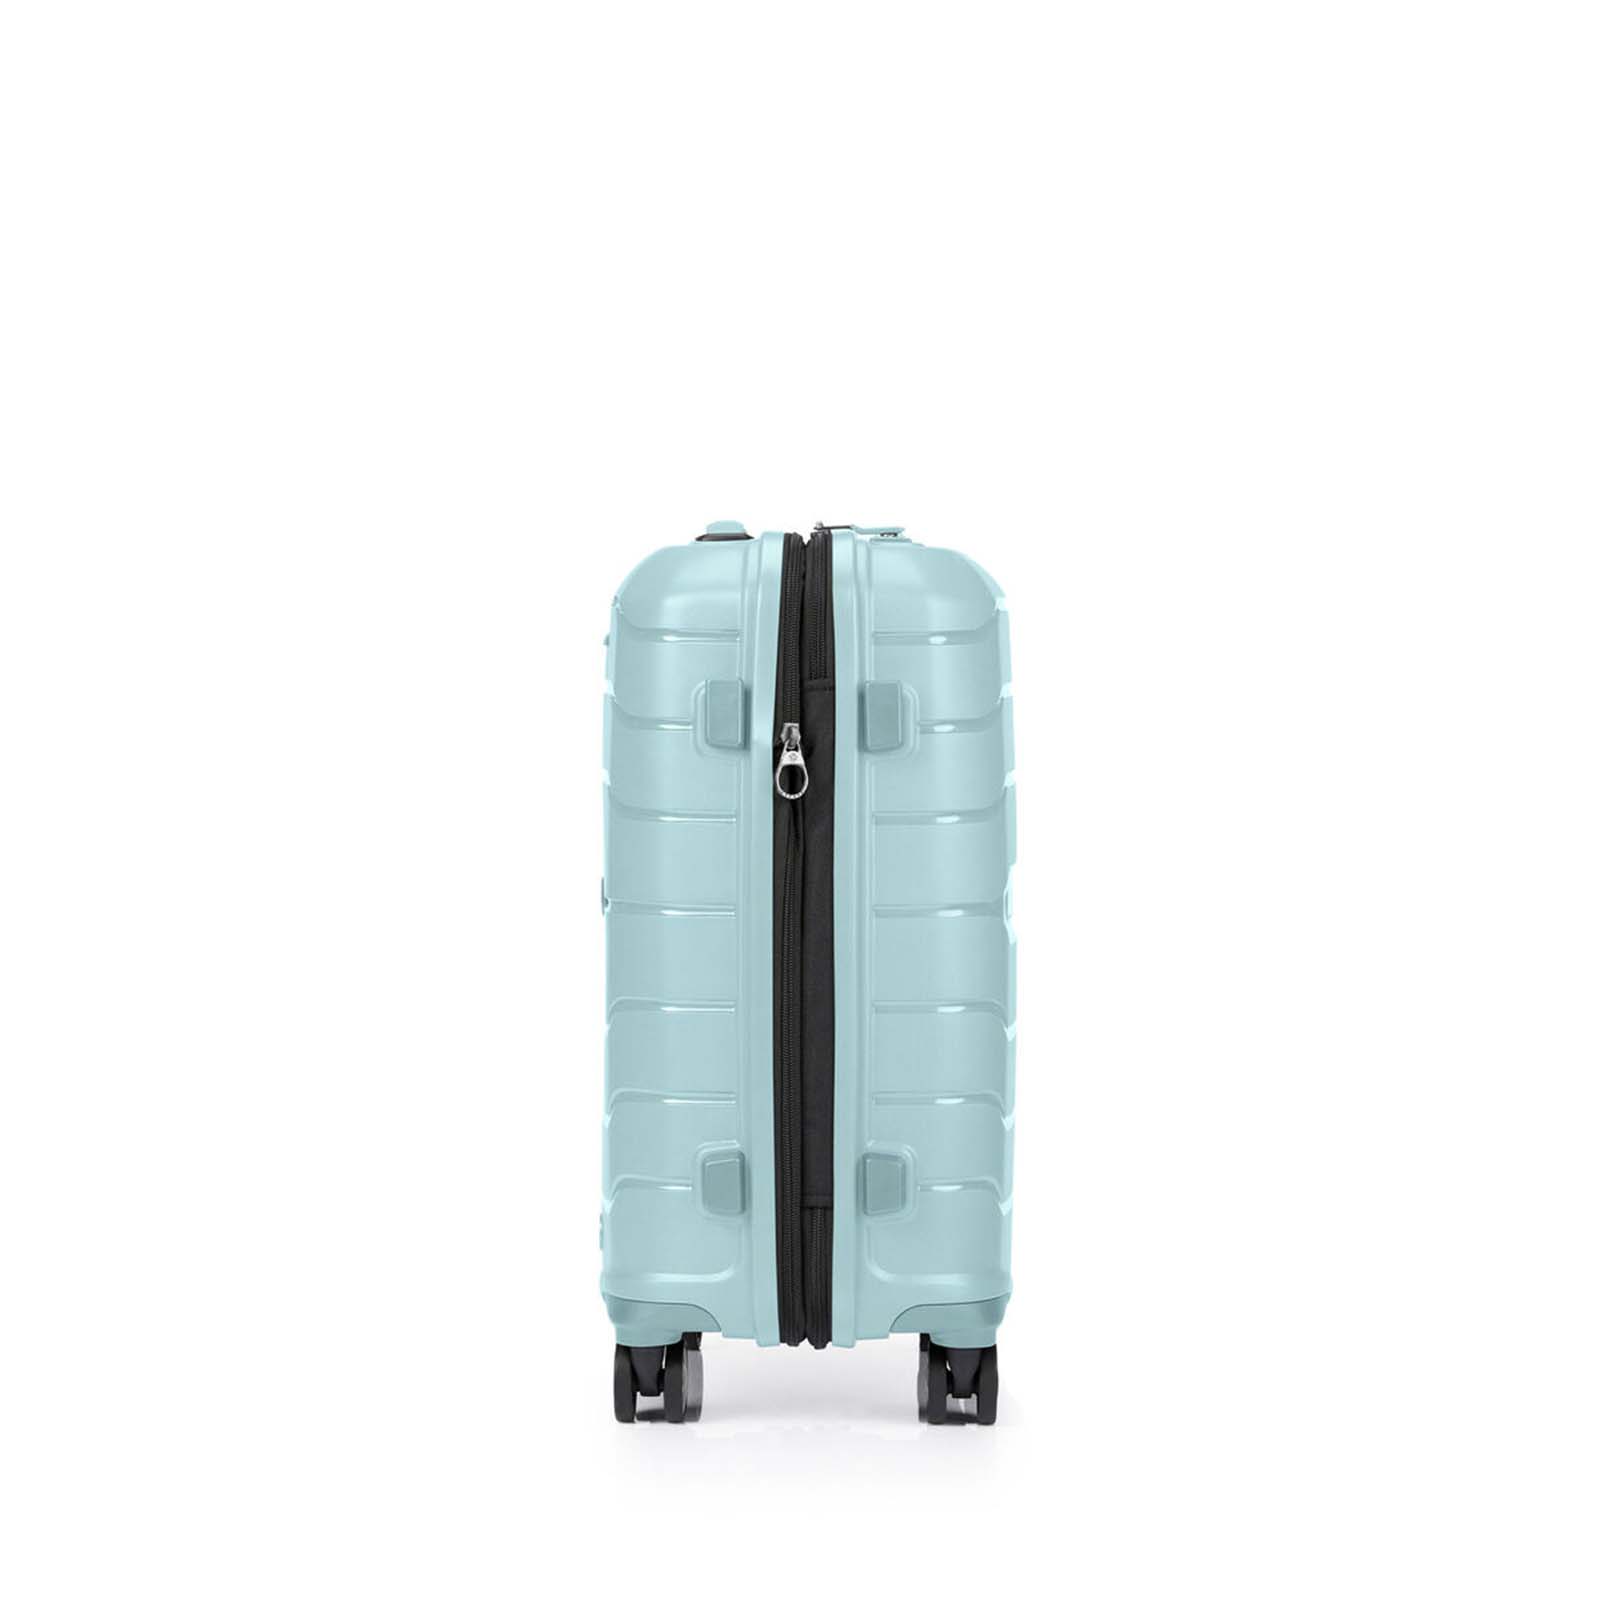 Samsonite-Oc2lite-55cm-Carry-On-Suitcase-Lagoon-Blue-Side